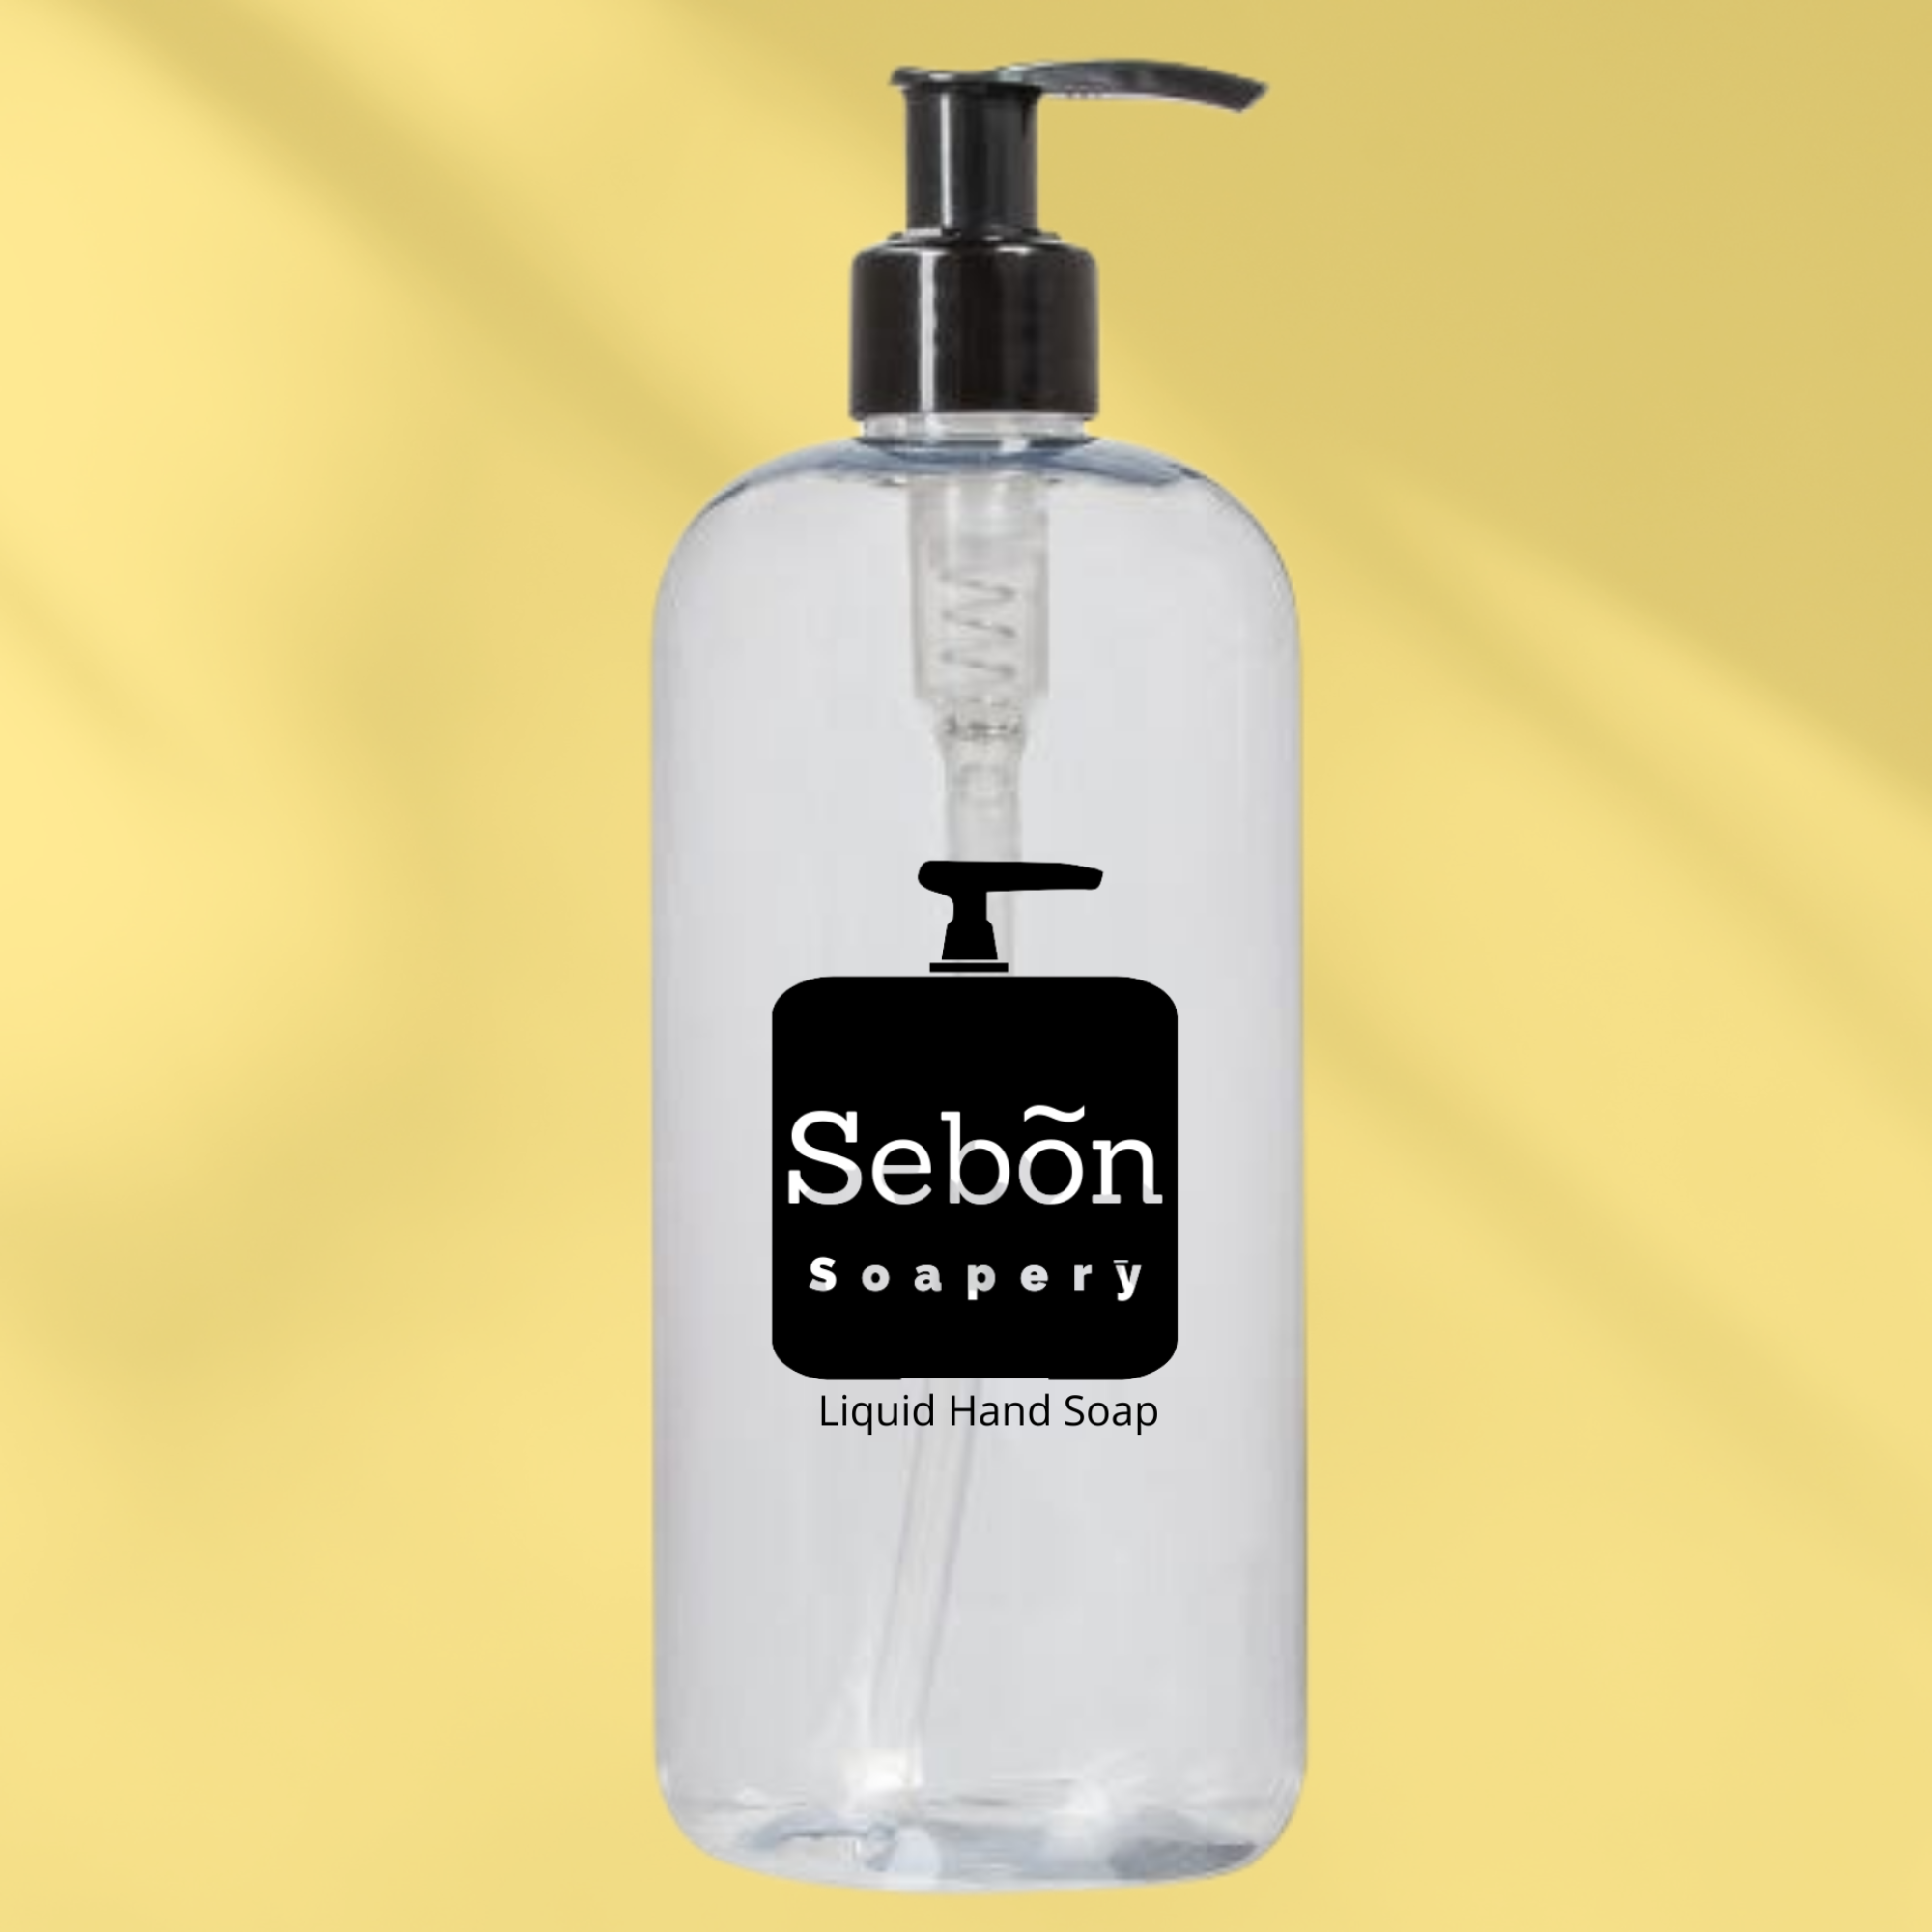 Sebon Banana Cream Pie Scented Liquid Hand Soap with Olive Oil